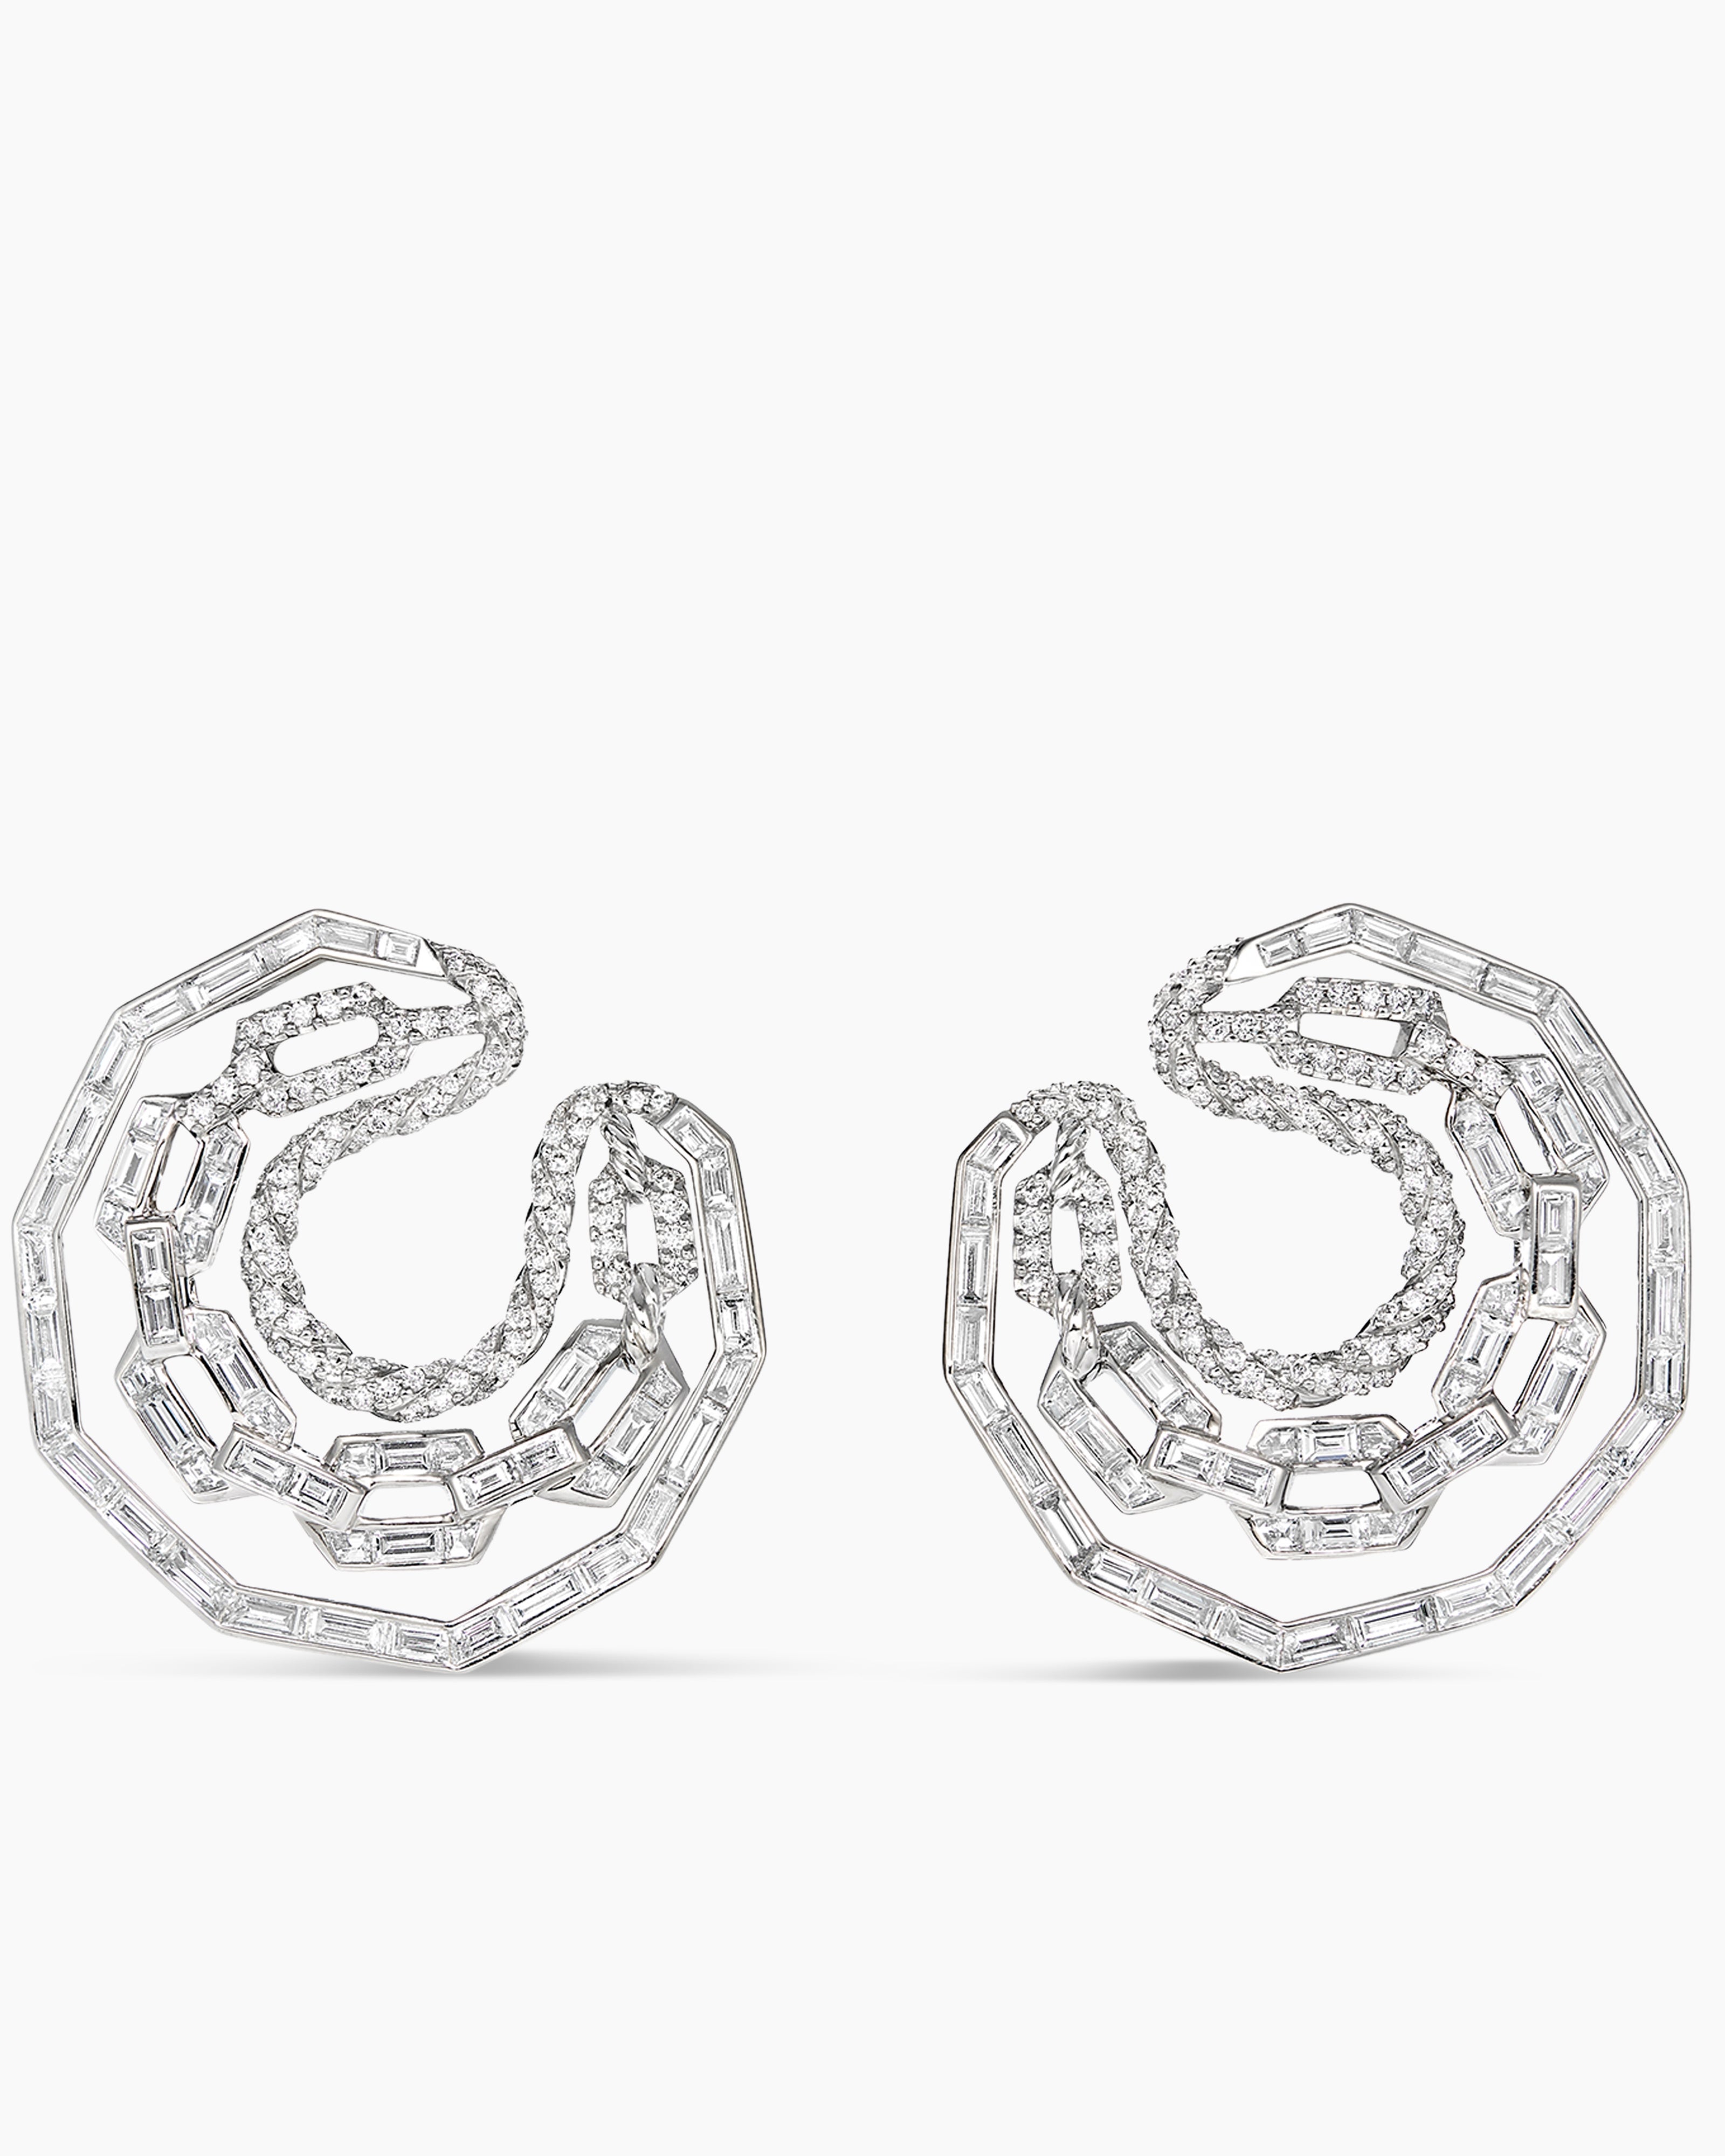 Stax Hoop Earrings in White Gold with Diamonds | David Yurman